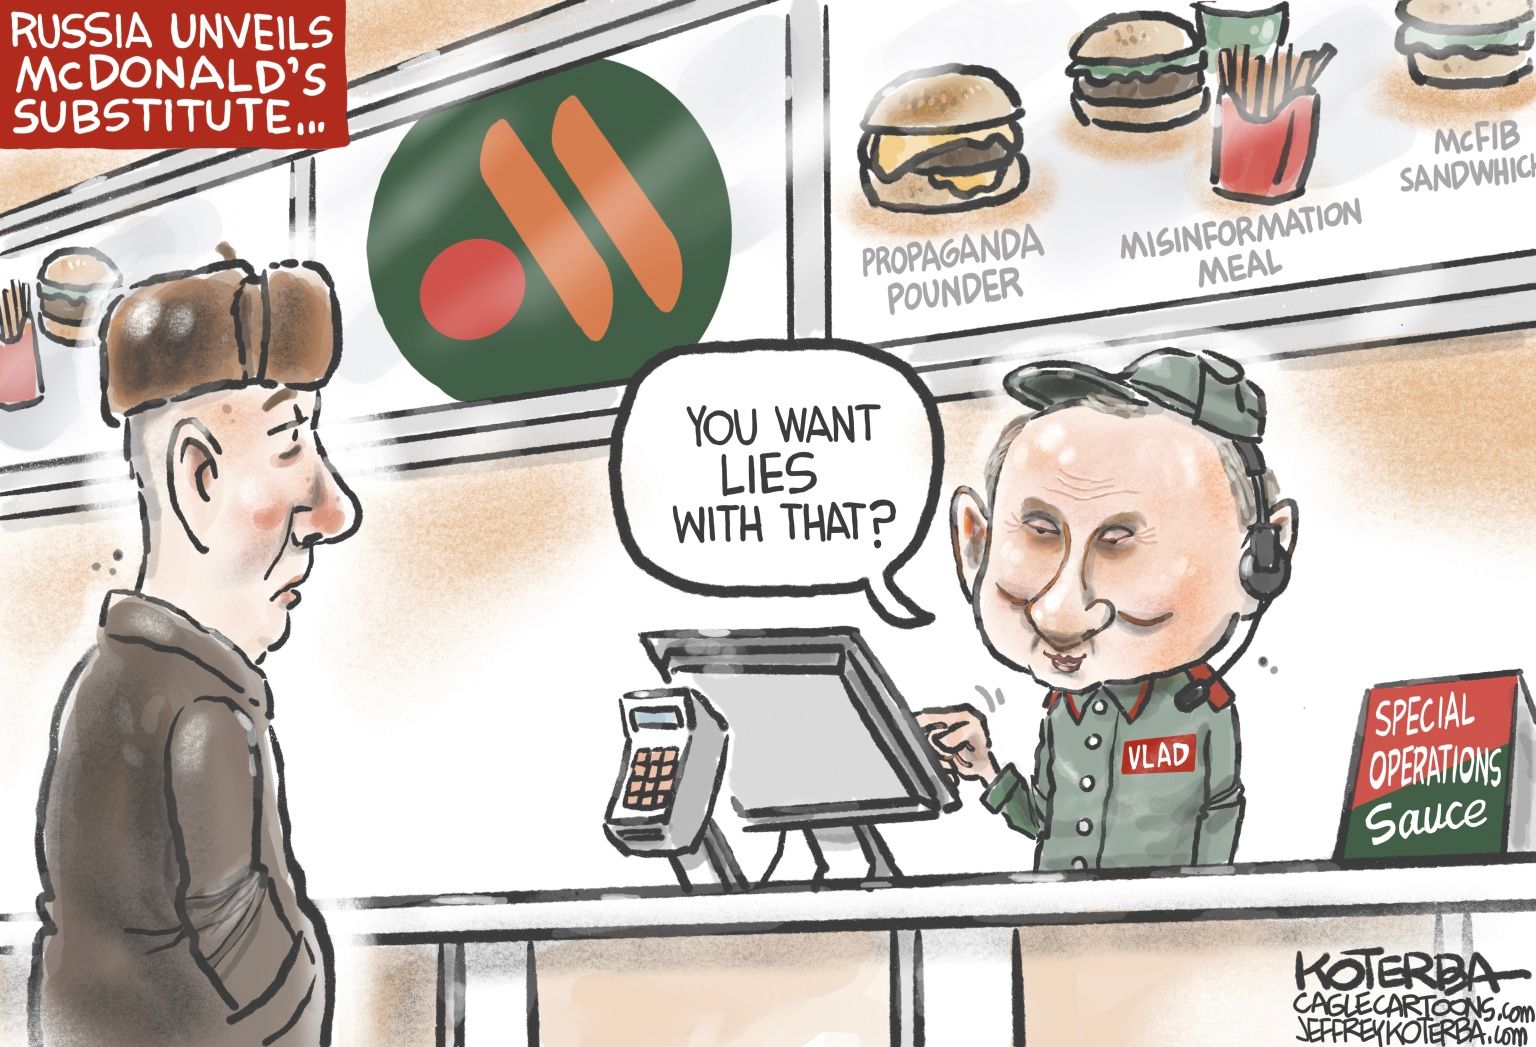 Rebranded McDonald's in Russia - newsjustin.press - Editorial Cartoon